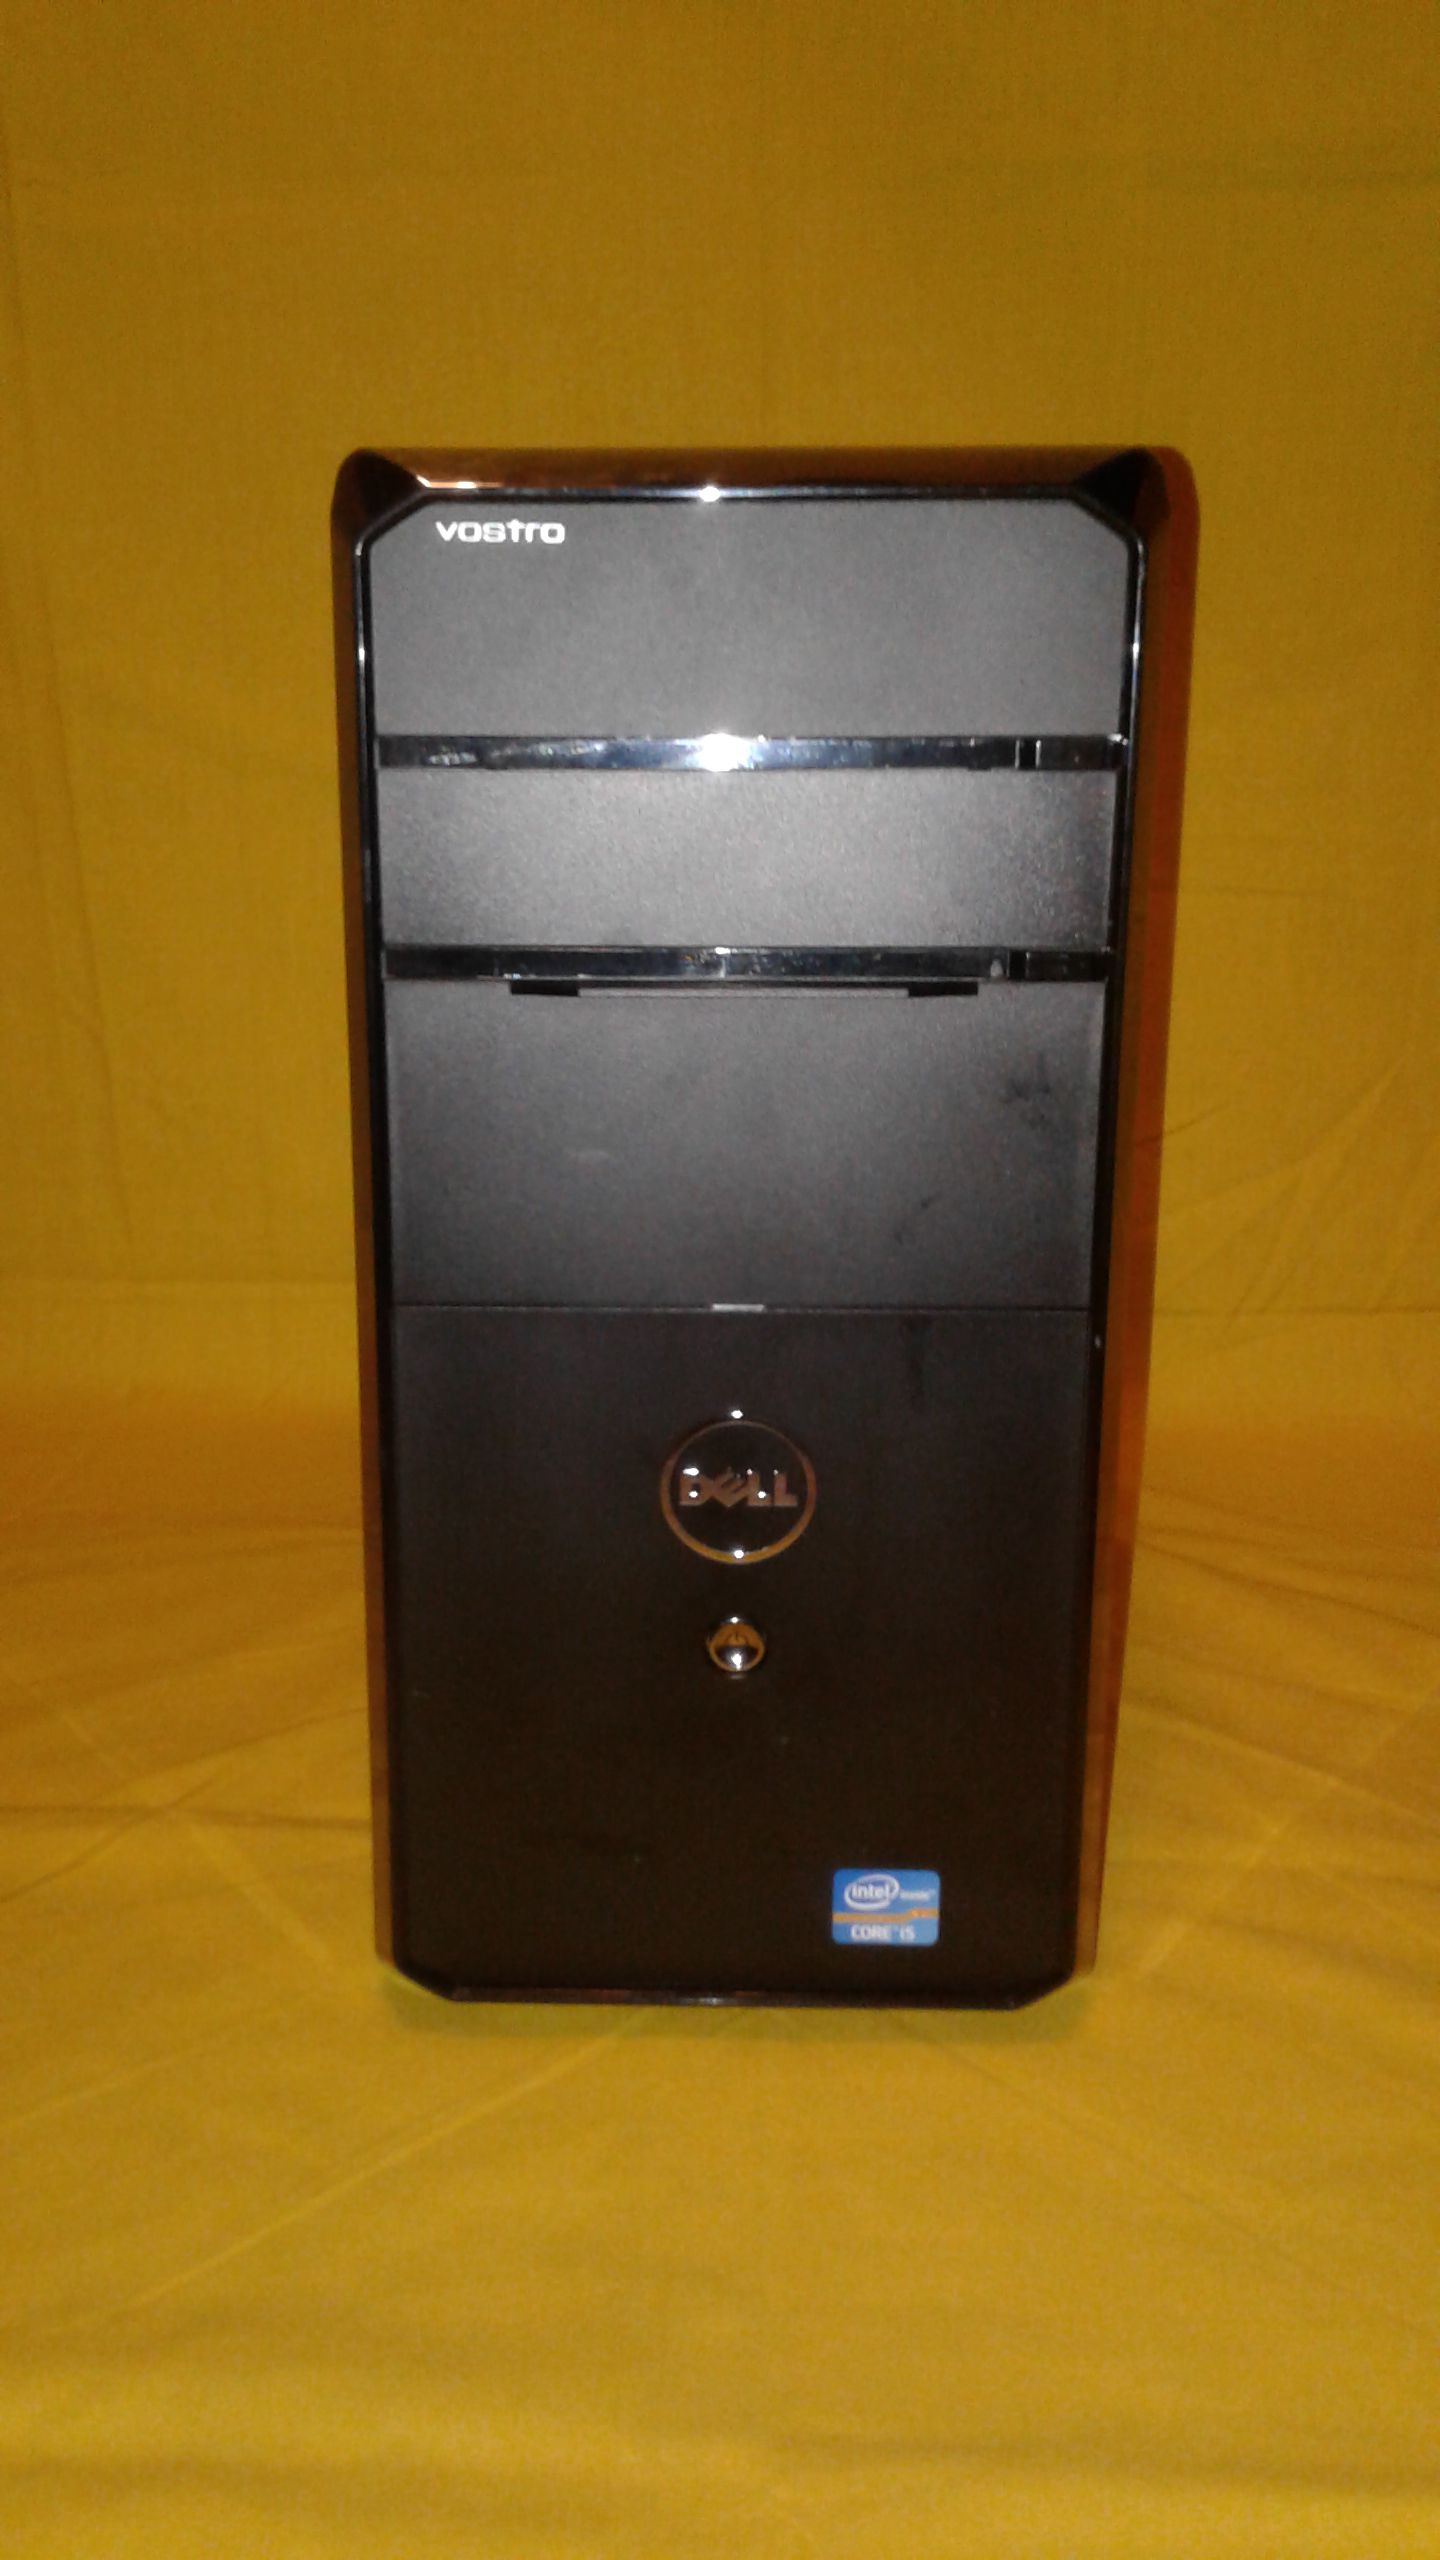 Dell Vostro 460 Desktop Computer